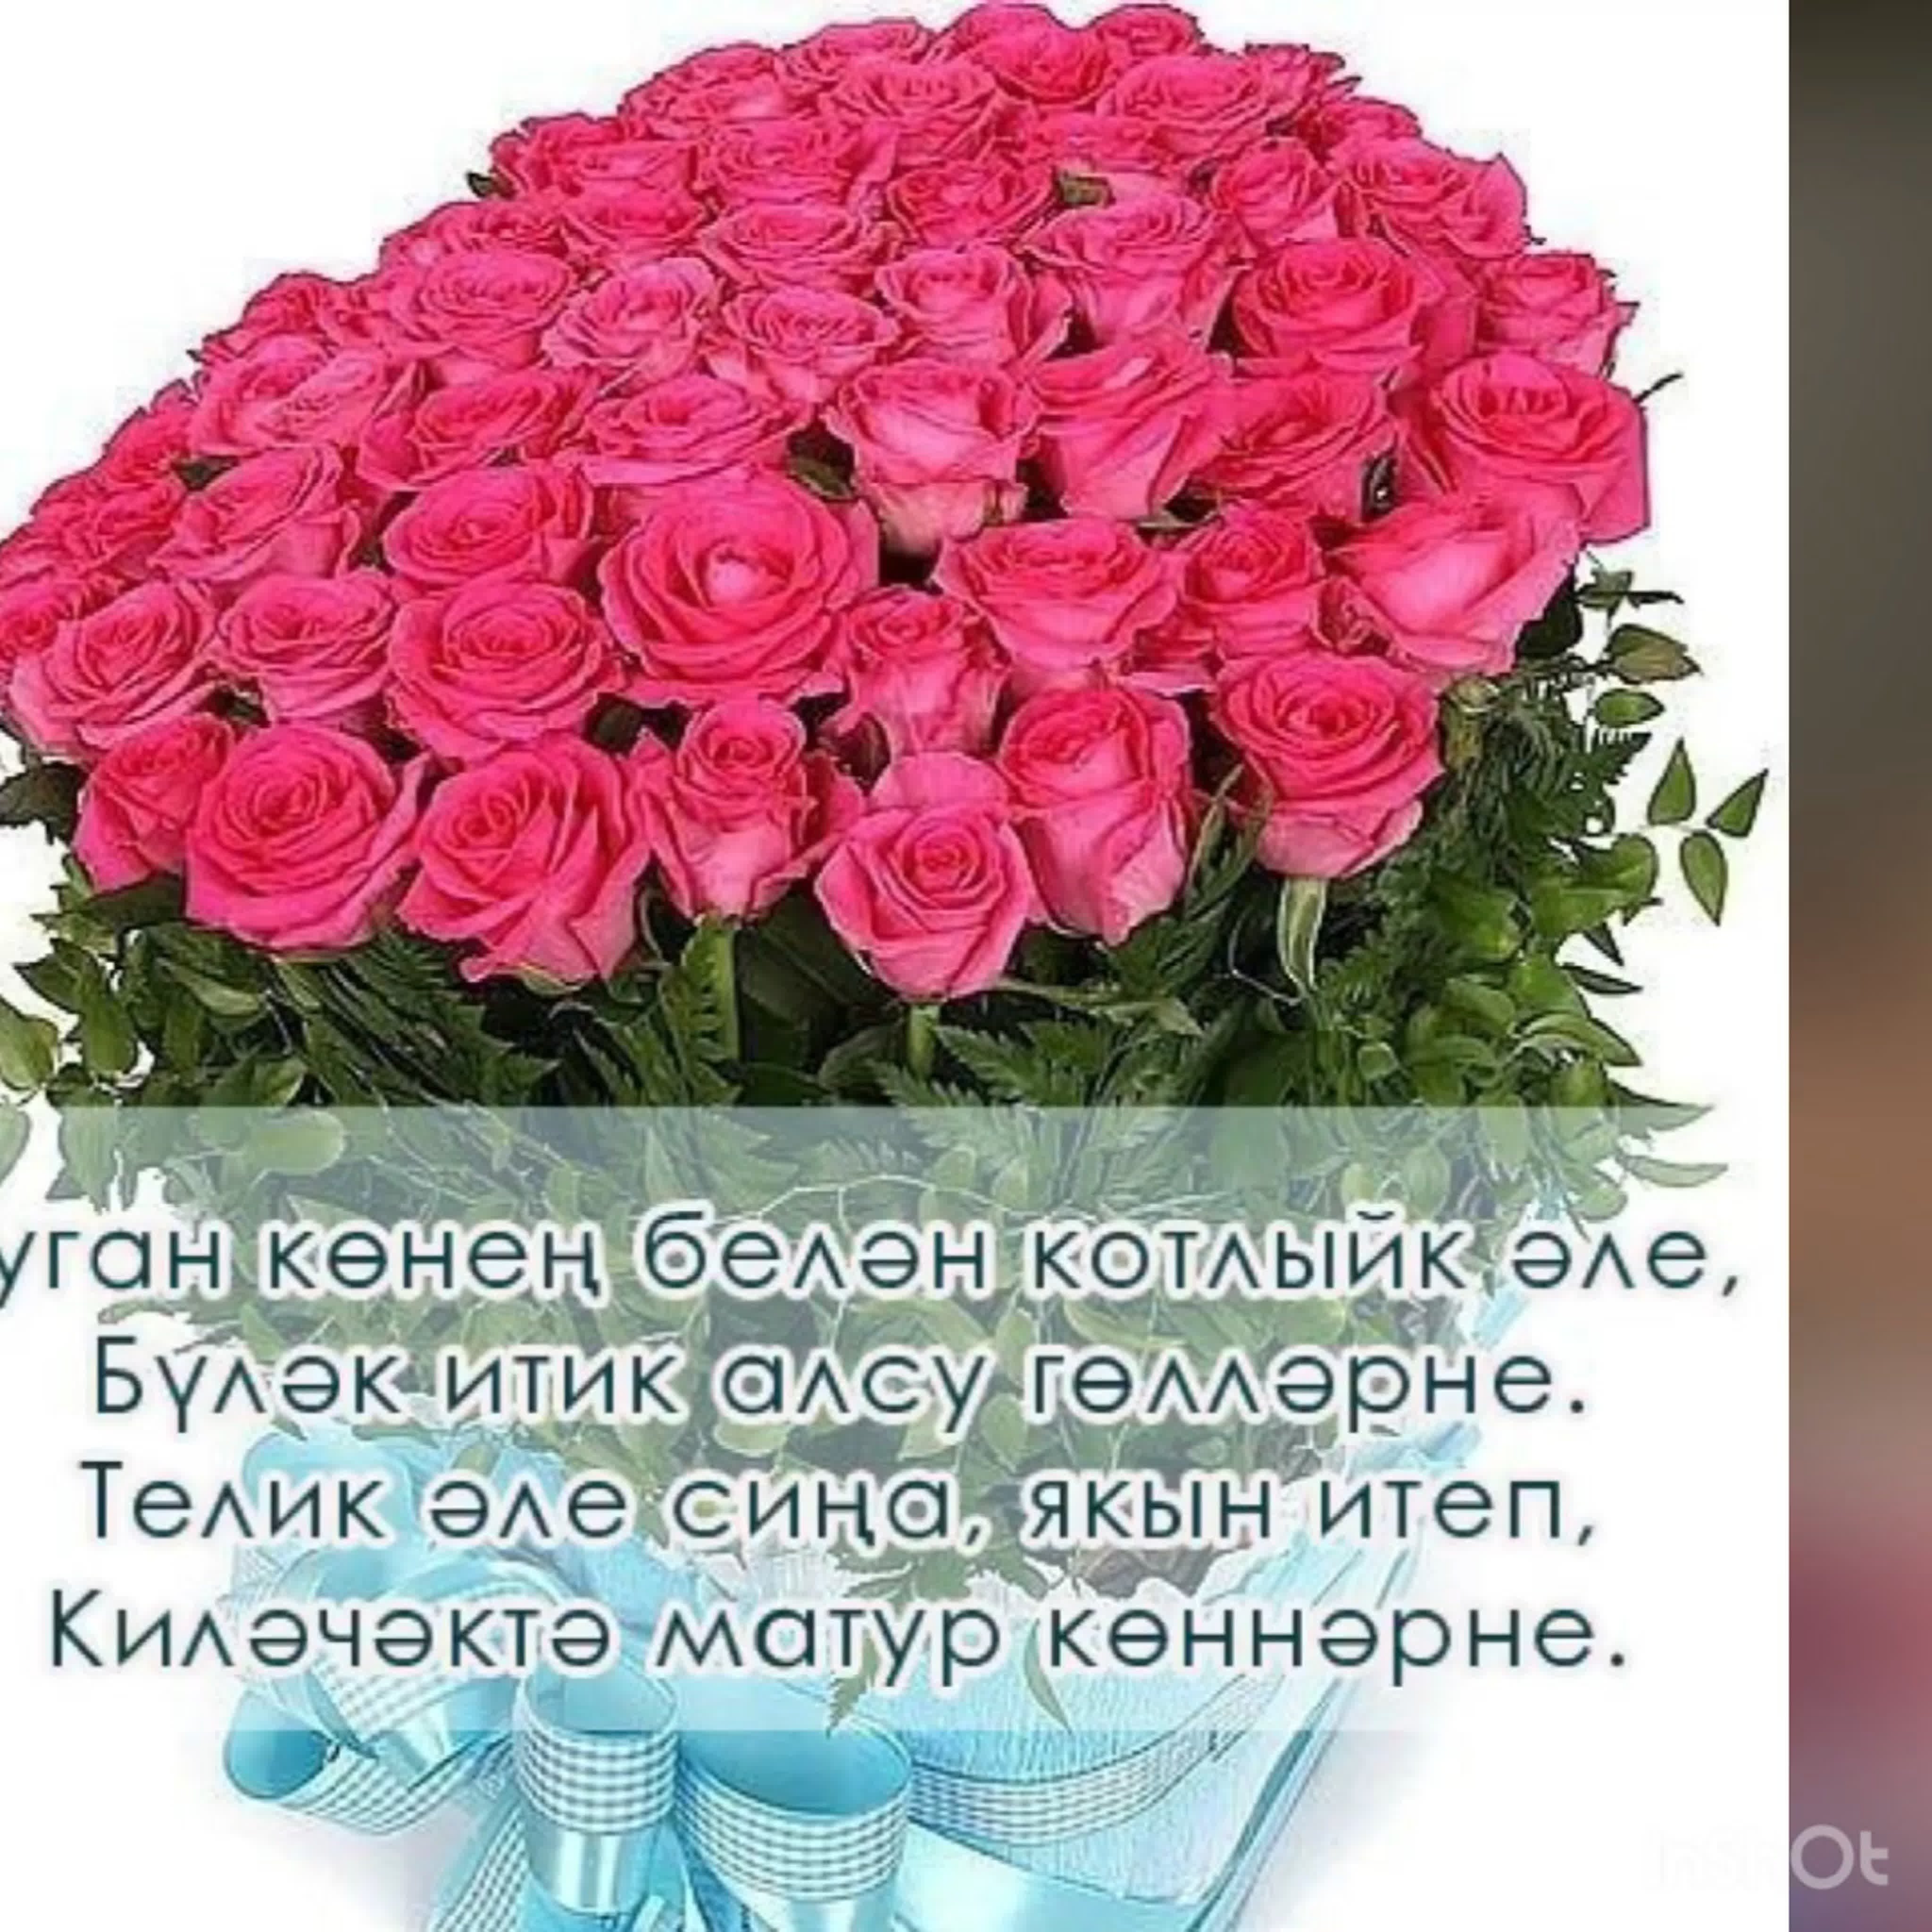 Мэдэният хезмэткэрлэре коне белэн котлау. Поздравления с днём рождения на татарском языке. Поздравления с днём рождения женщине на татарском языке. Поздравления с днём рождения женщине на татарском. Поздравления с днём рождения женщине на татарском я.